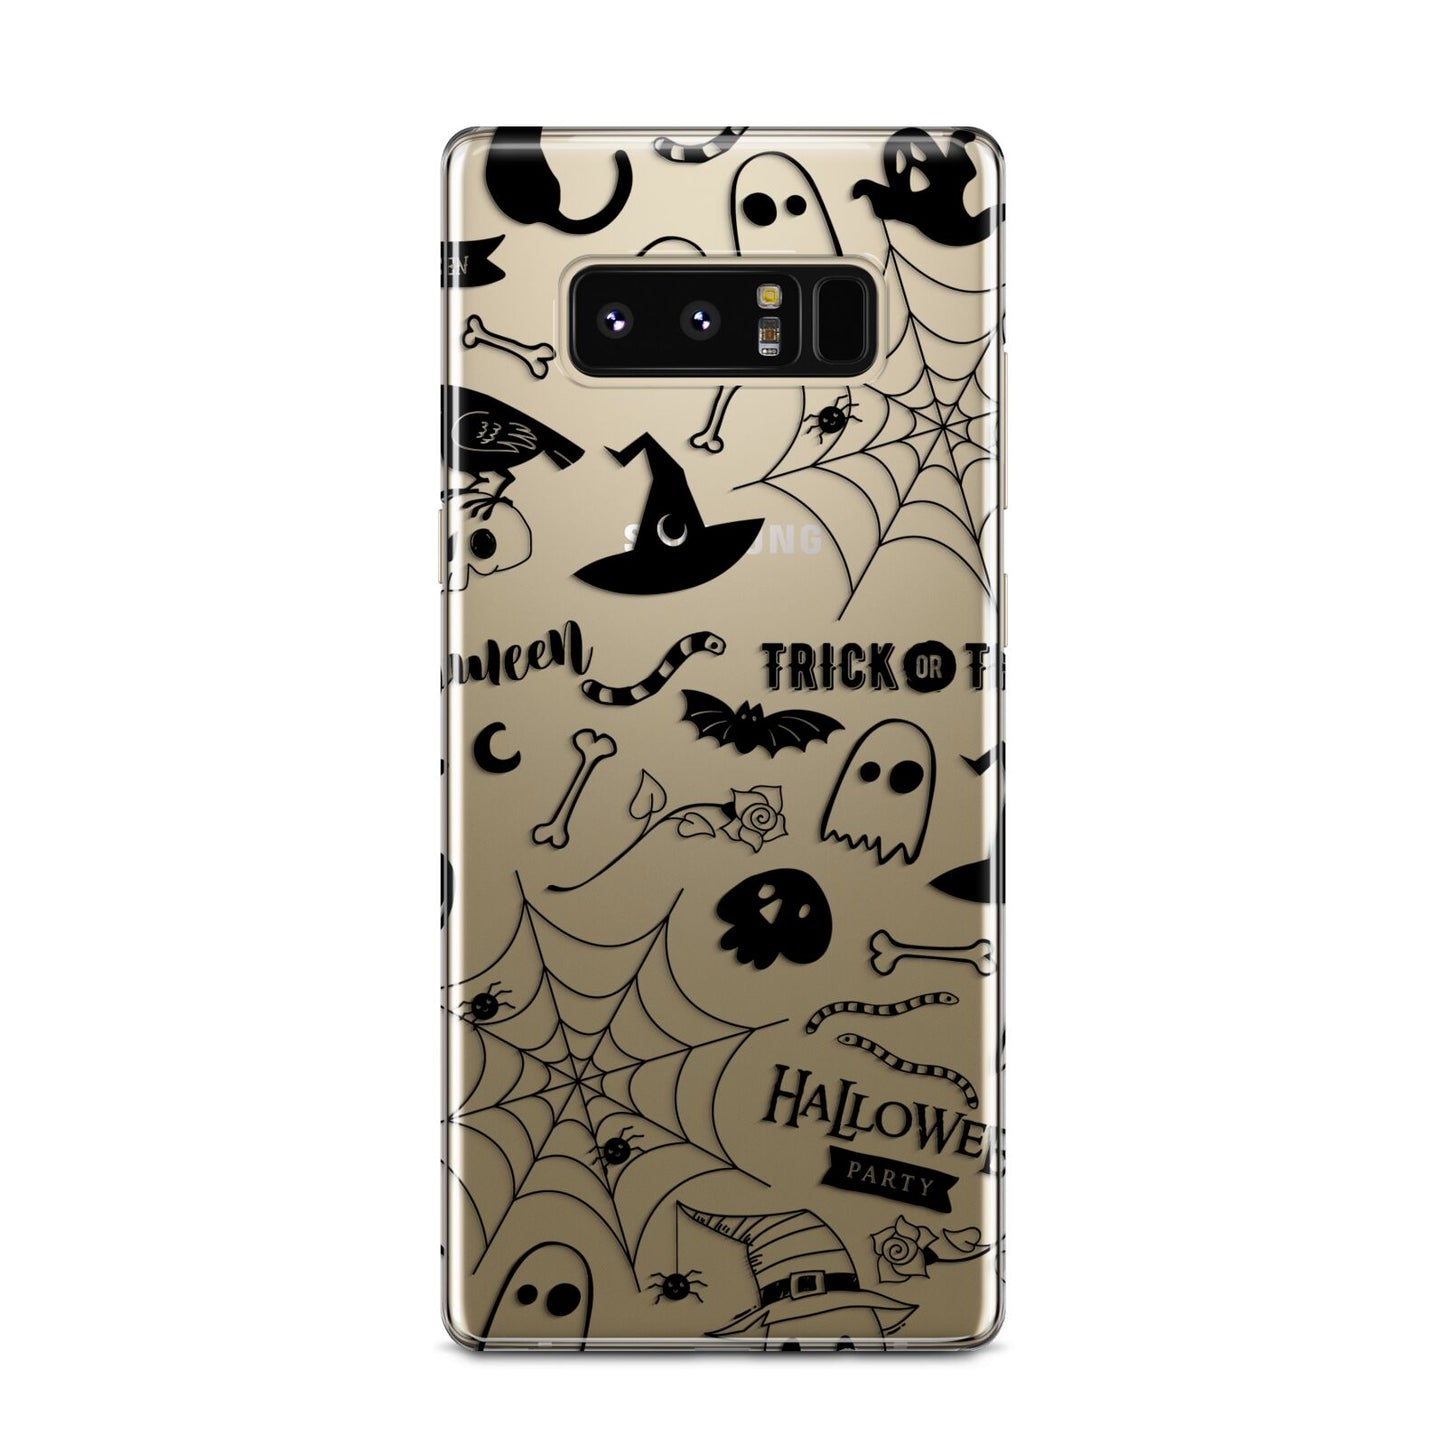 Monochrome Halloween Illustrations Samsung Galaxy Note 8 Case